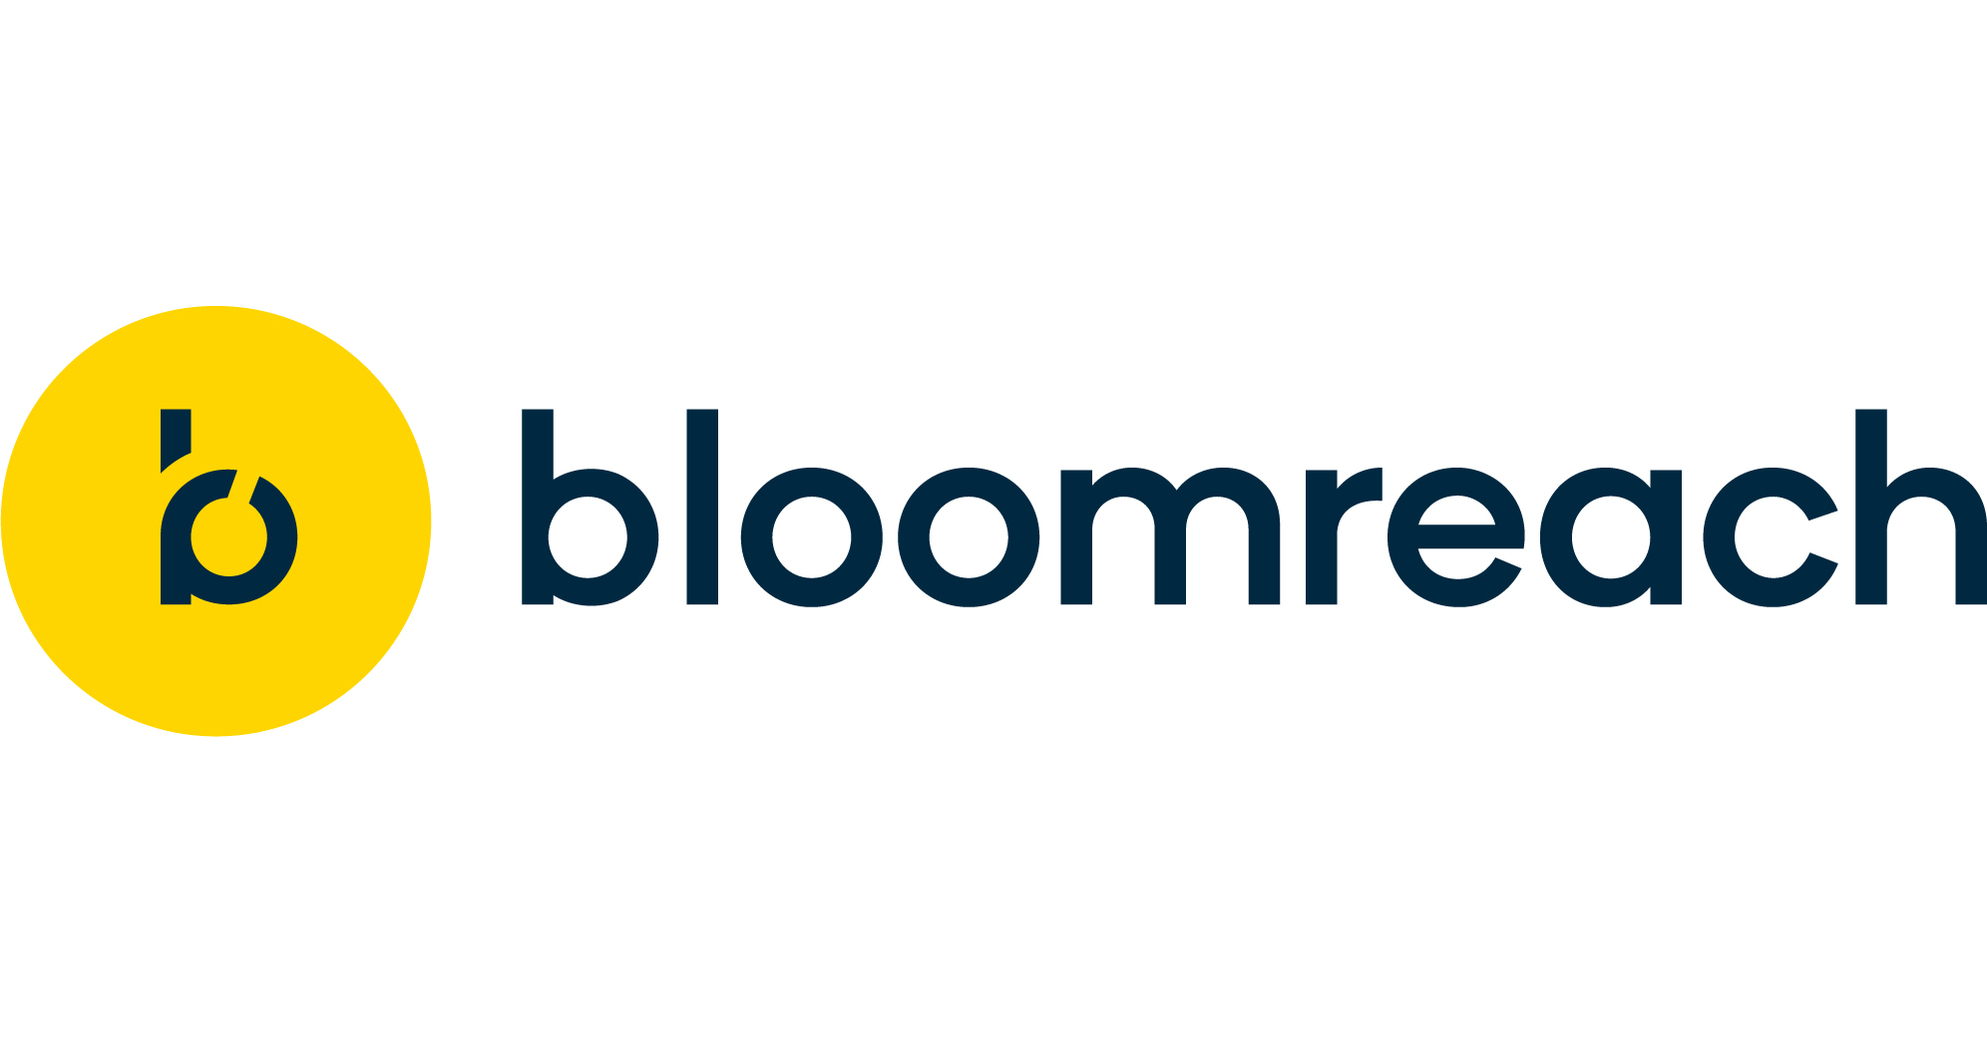 bloom reach logo